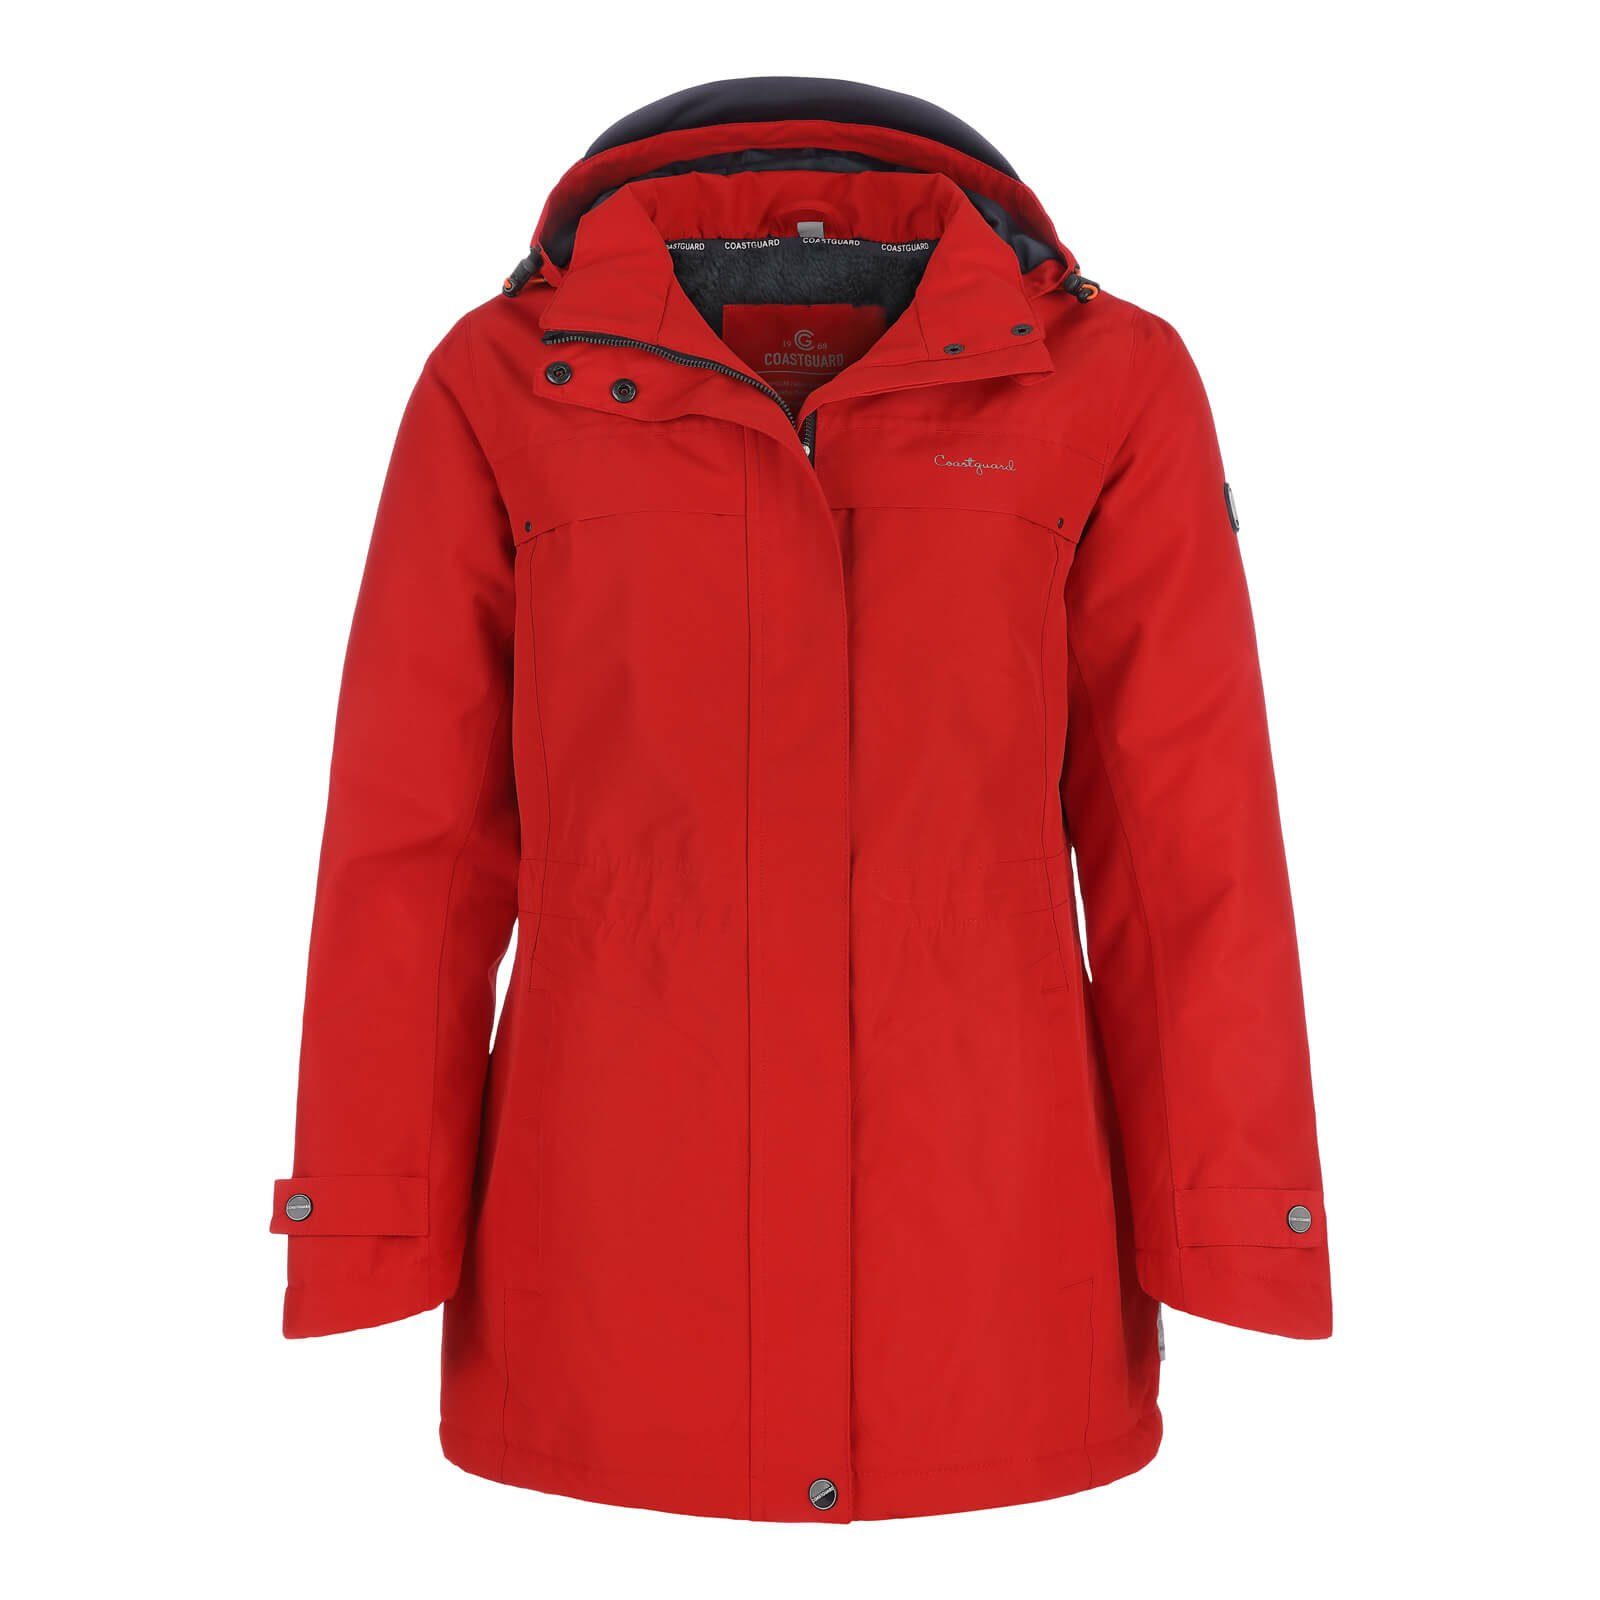 Outdoor-Jacke mit Kapuze Coastguard - atmungsaktiv abnehmbarer rot Funktionsjacke wasserdicht Damen